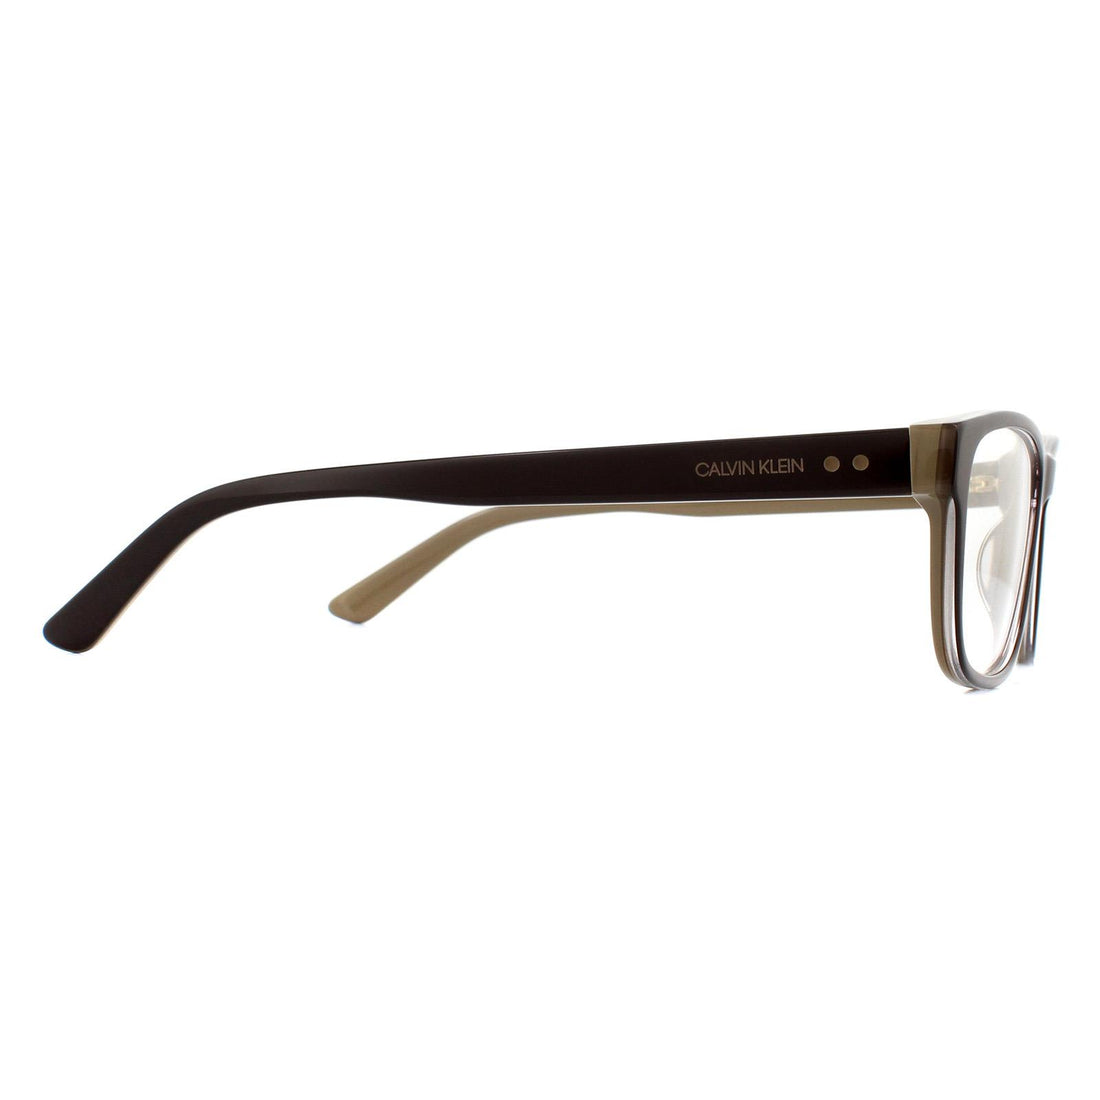 Calvin Klein Glasses Frames CK18540 203 Dark Brown